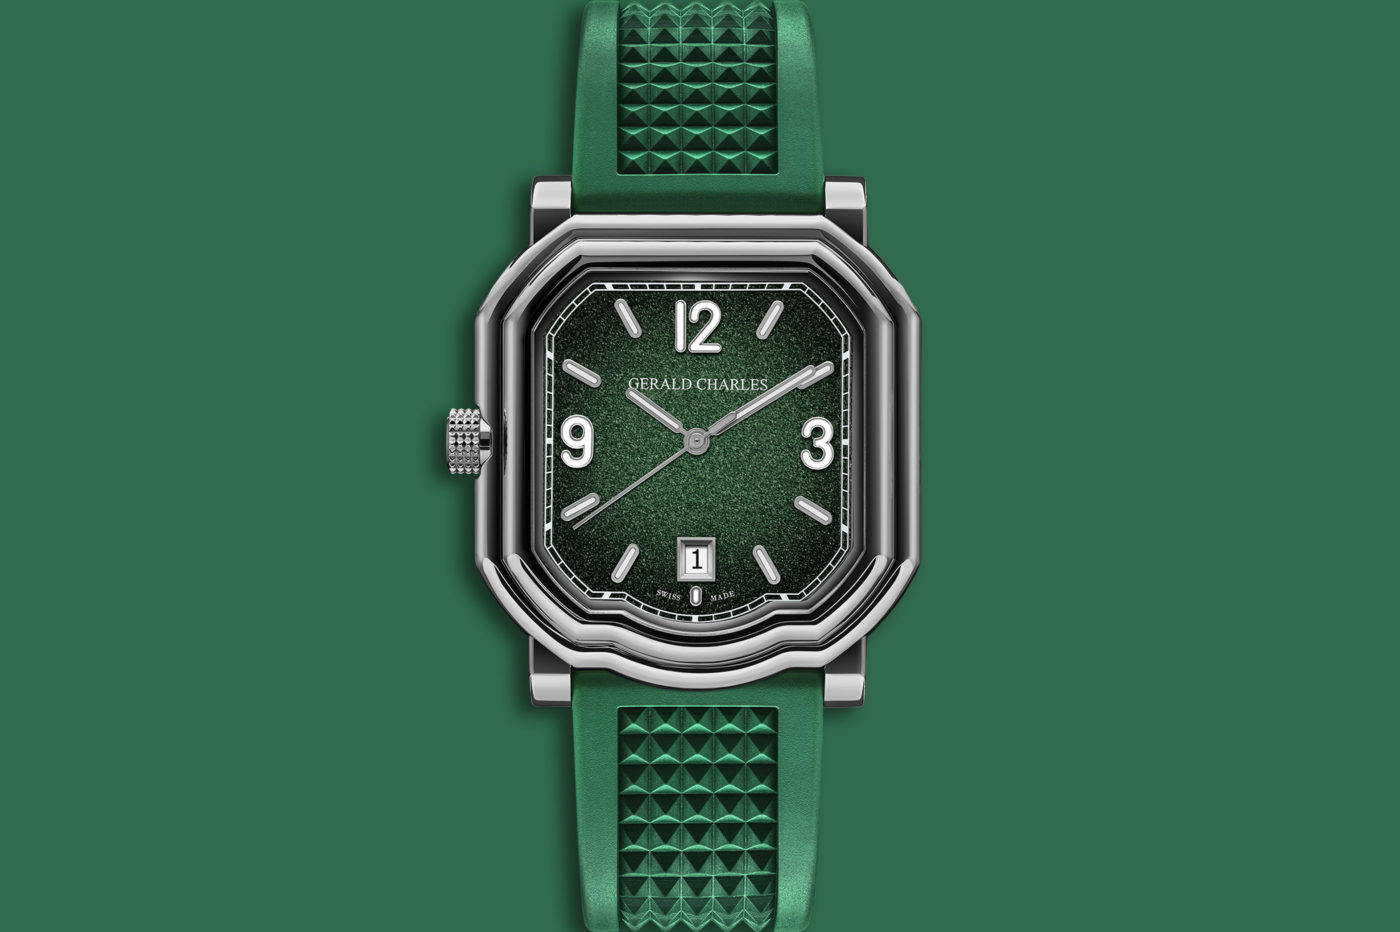 Hubert Hurkacz i zegarek Gerald Charles GC Sport (Grass) [dostępność, cena]